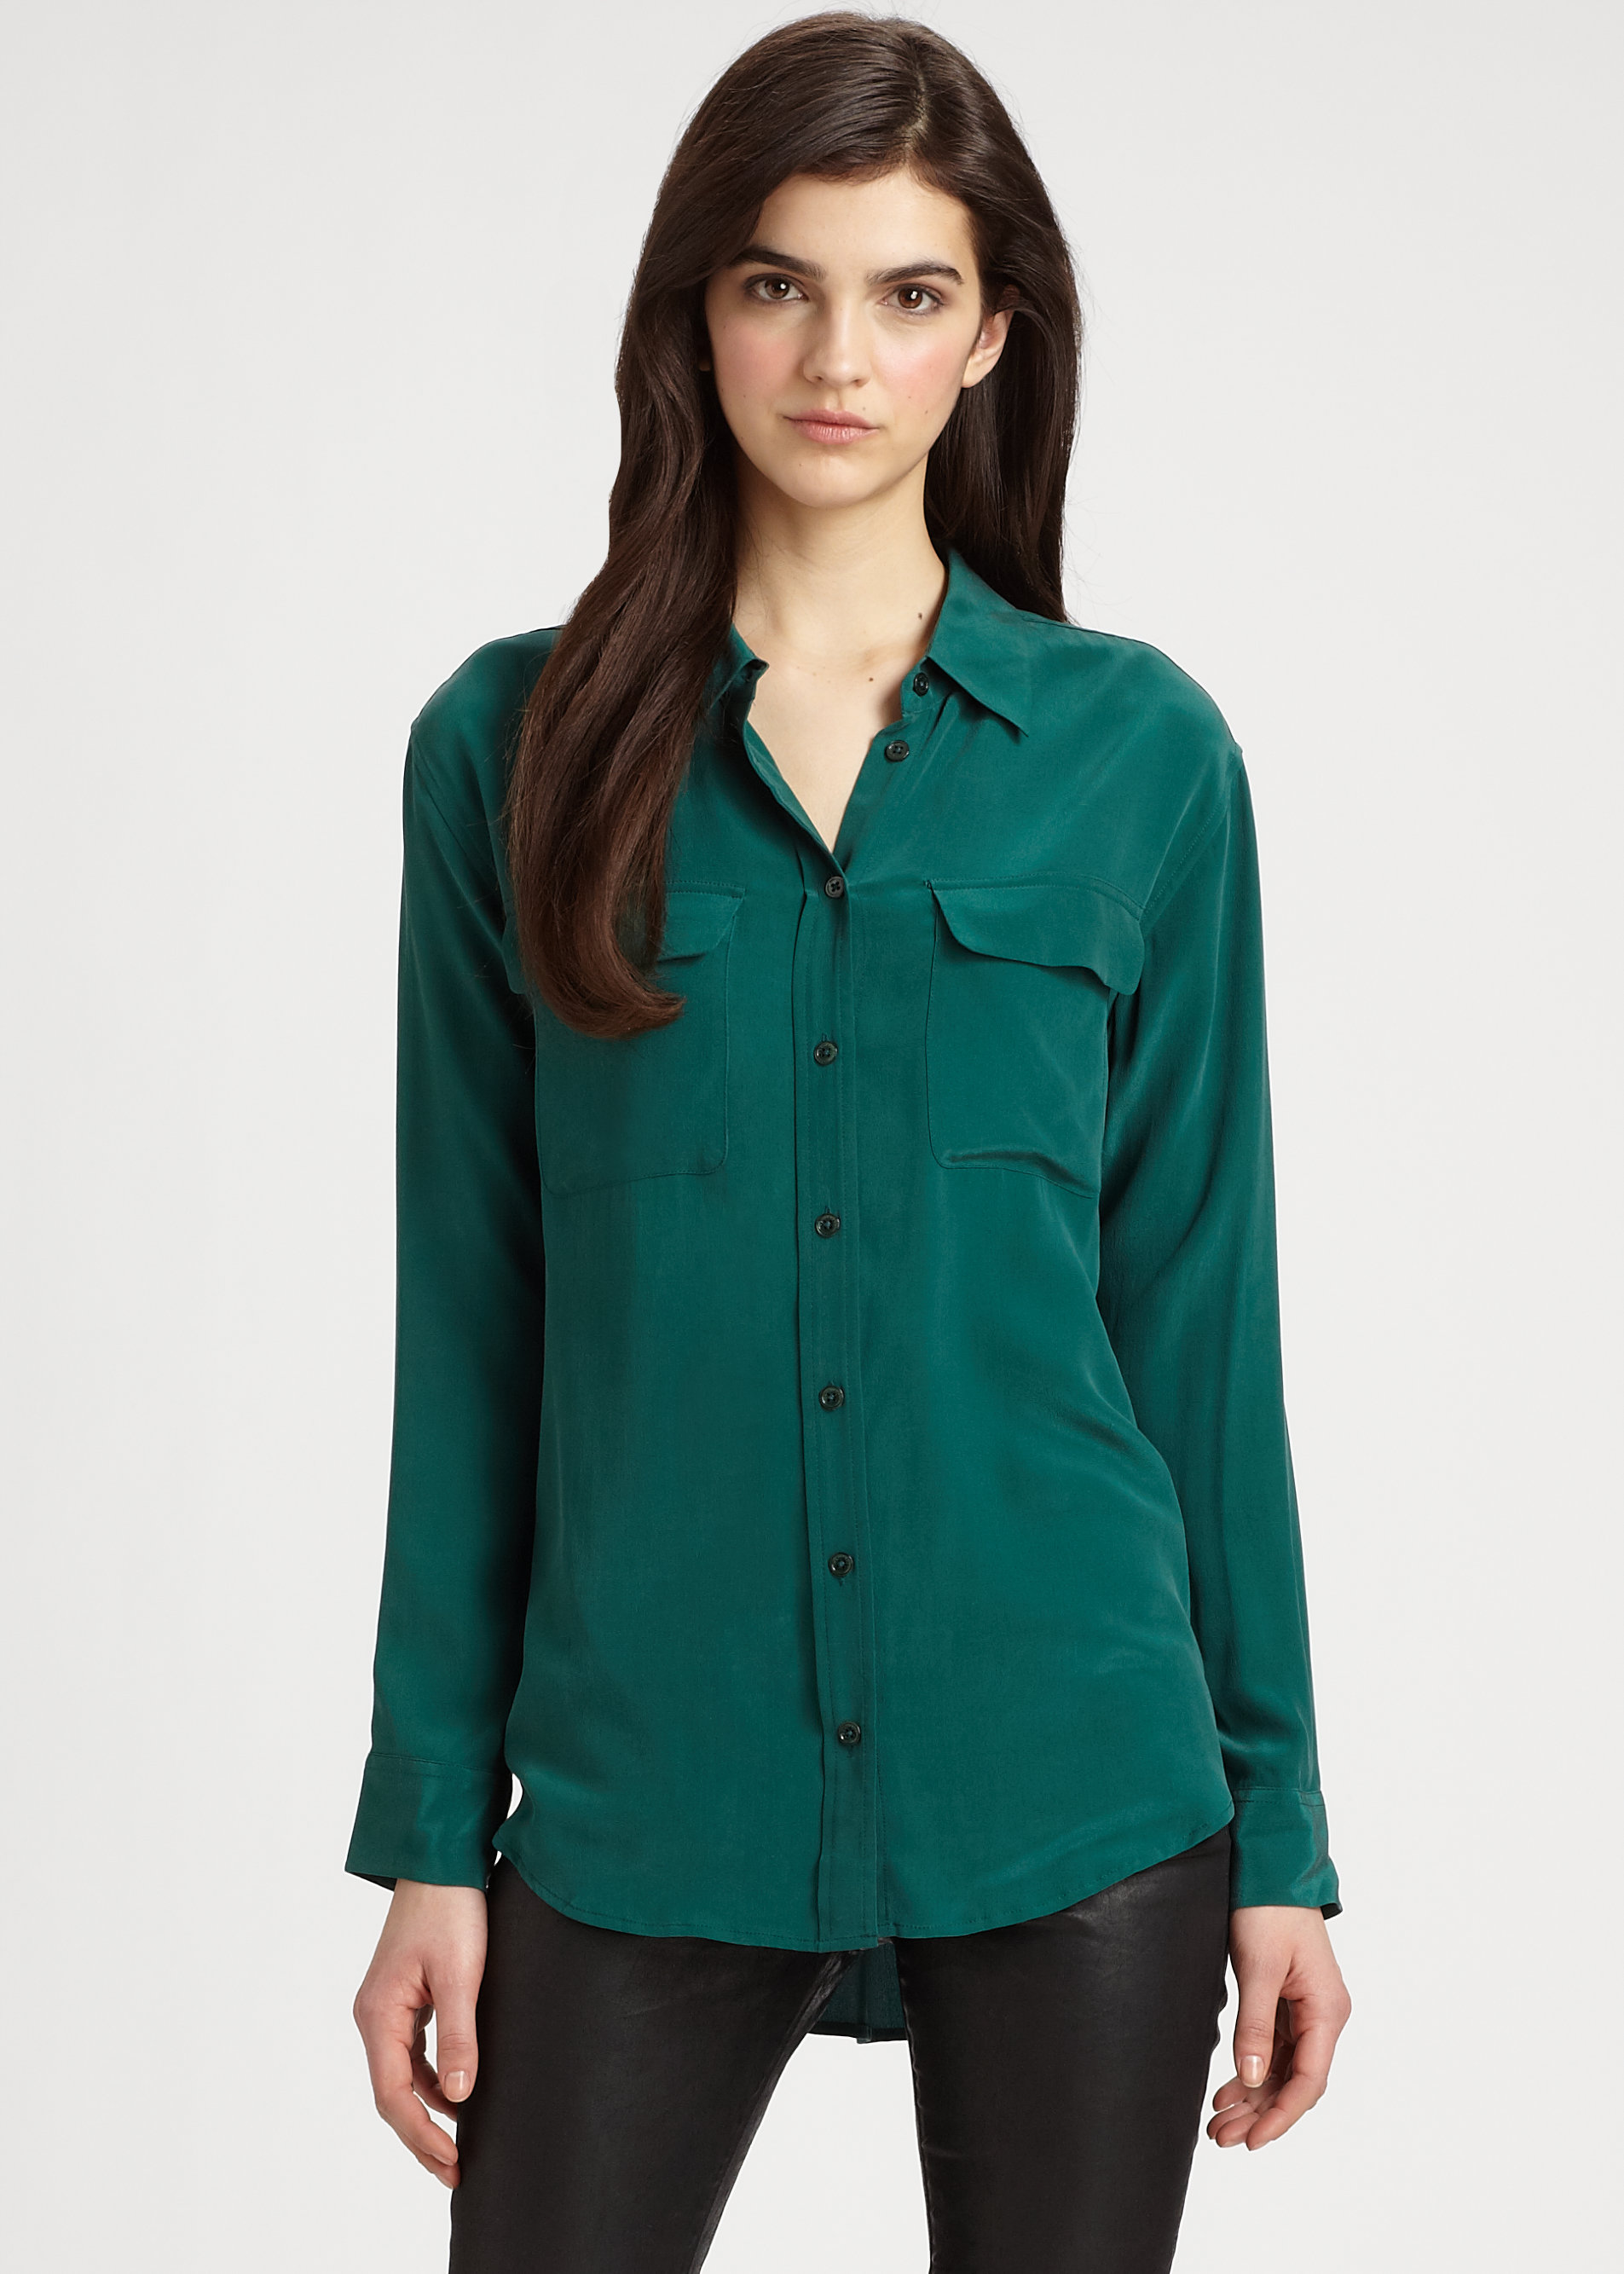 Lyst - Equipment Signature Silk Shirt in Green